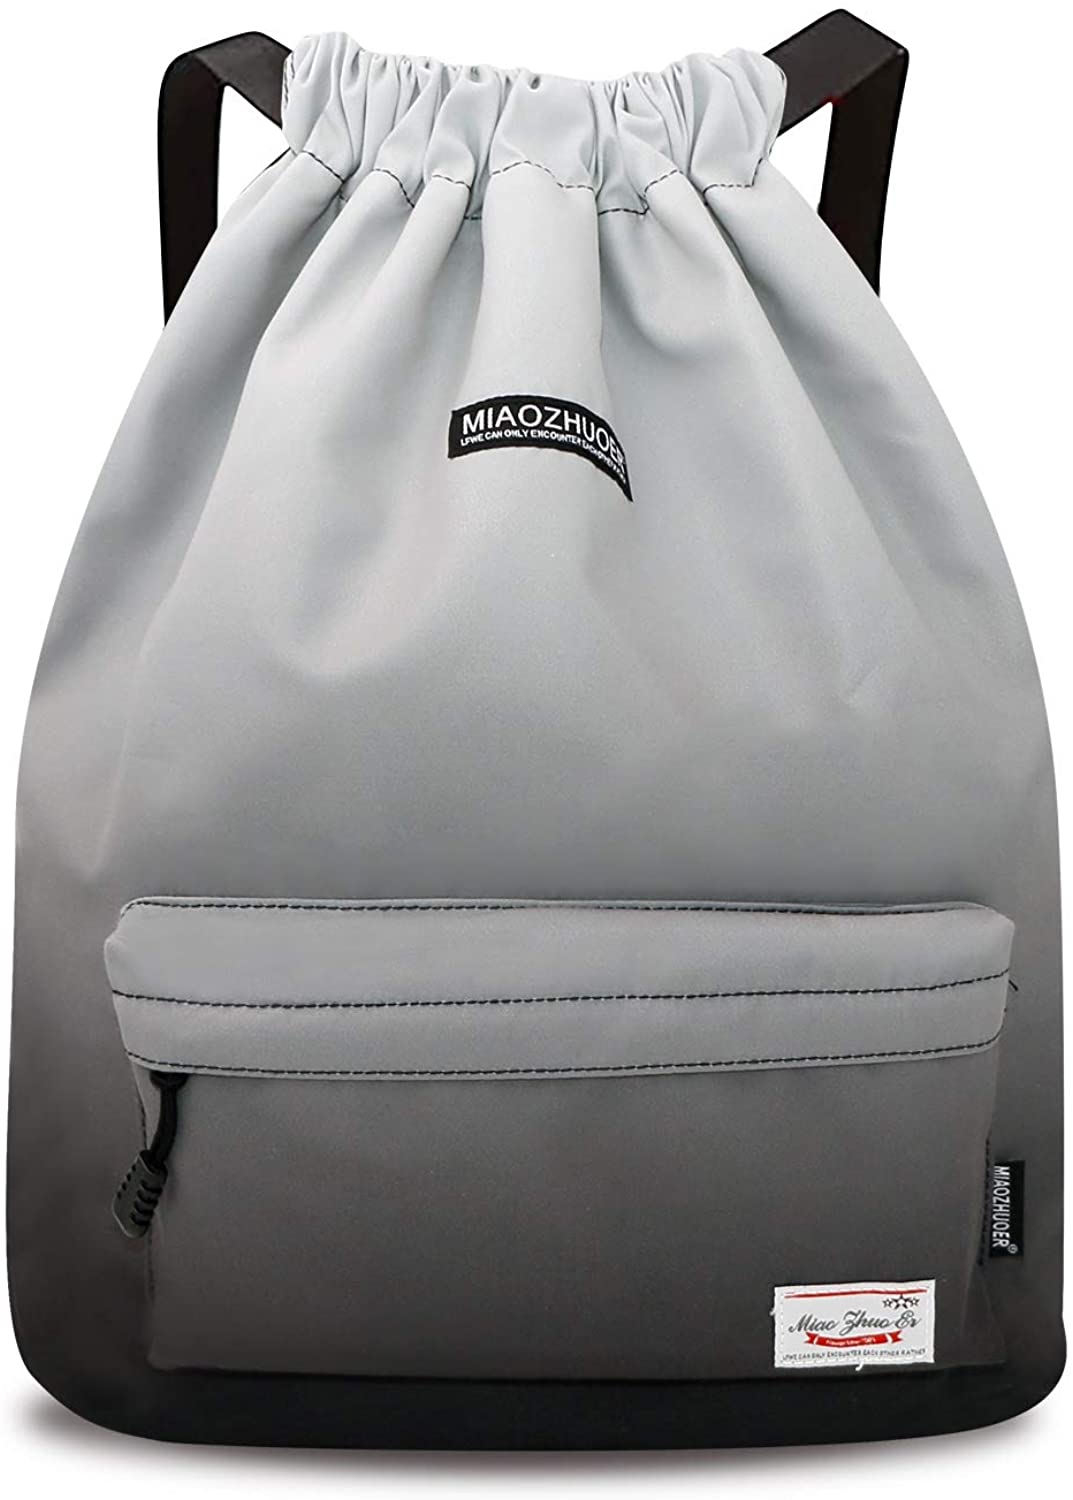 Risefit Waterproof Drawstring Bag, Drawstring Backpack, Gym Bag Sackpack  Sports